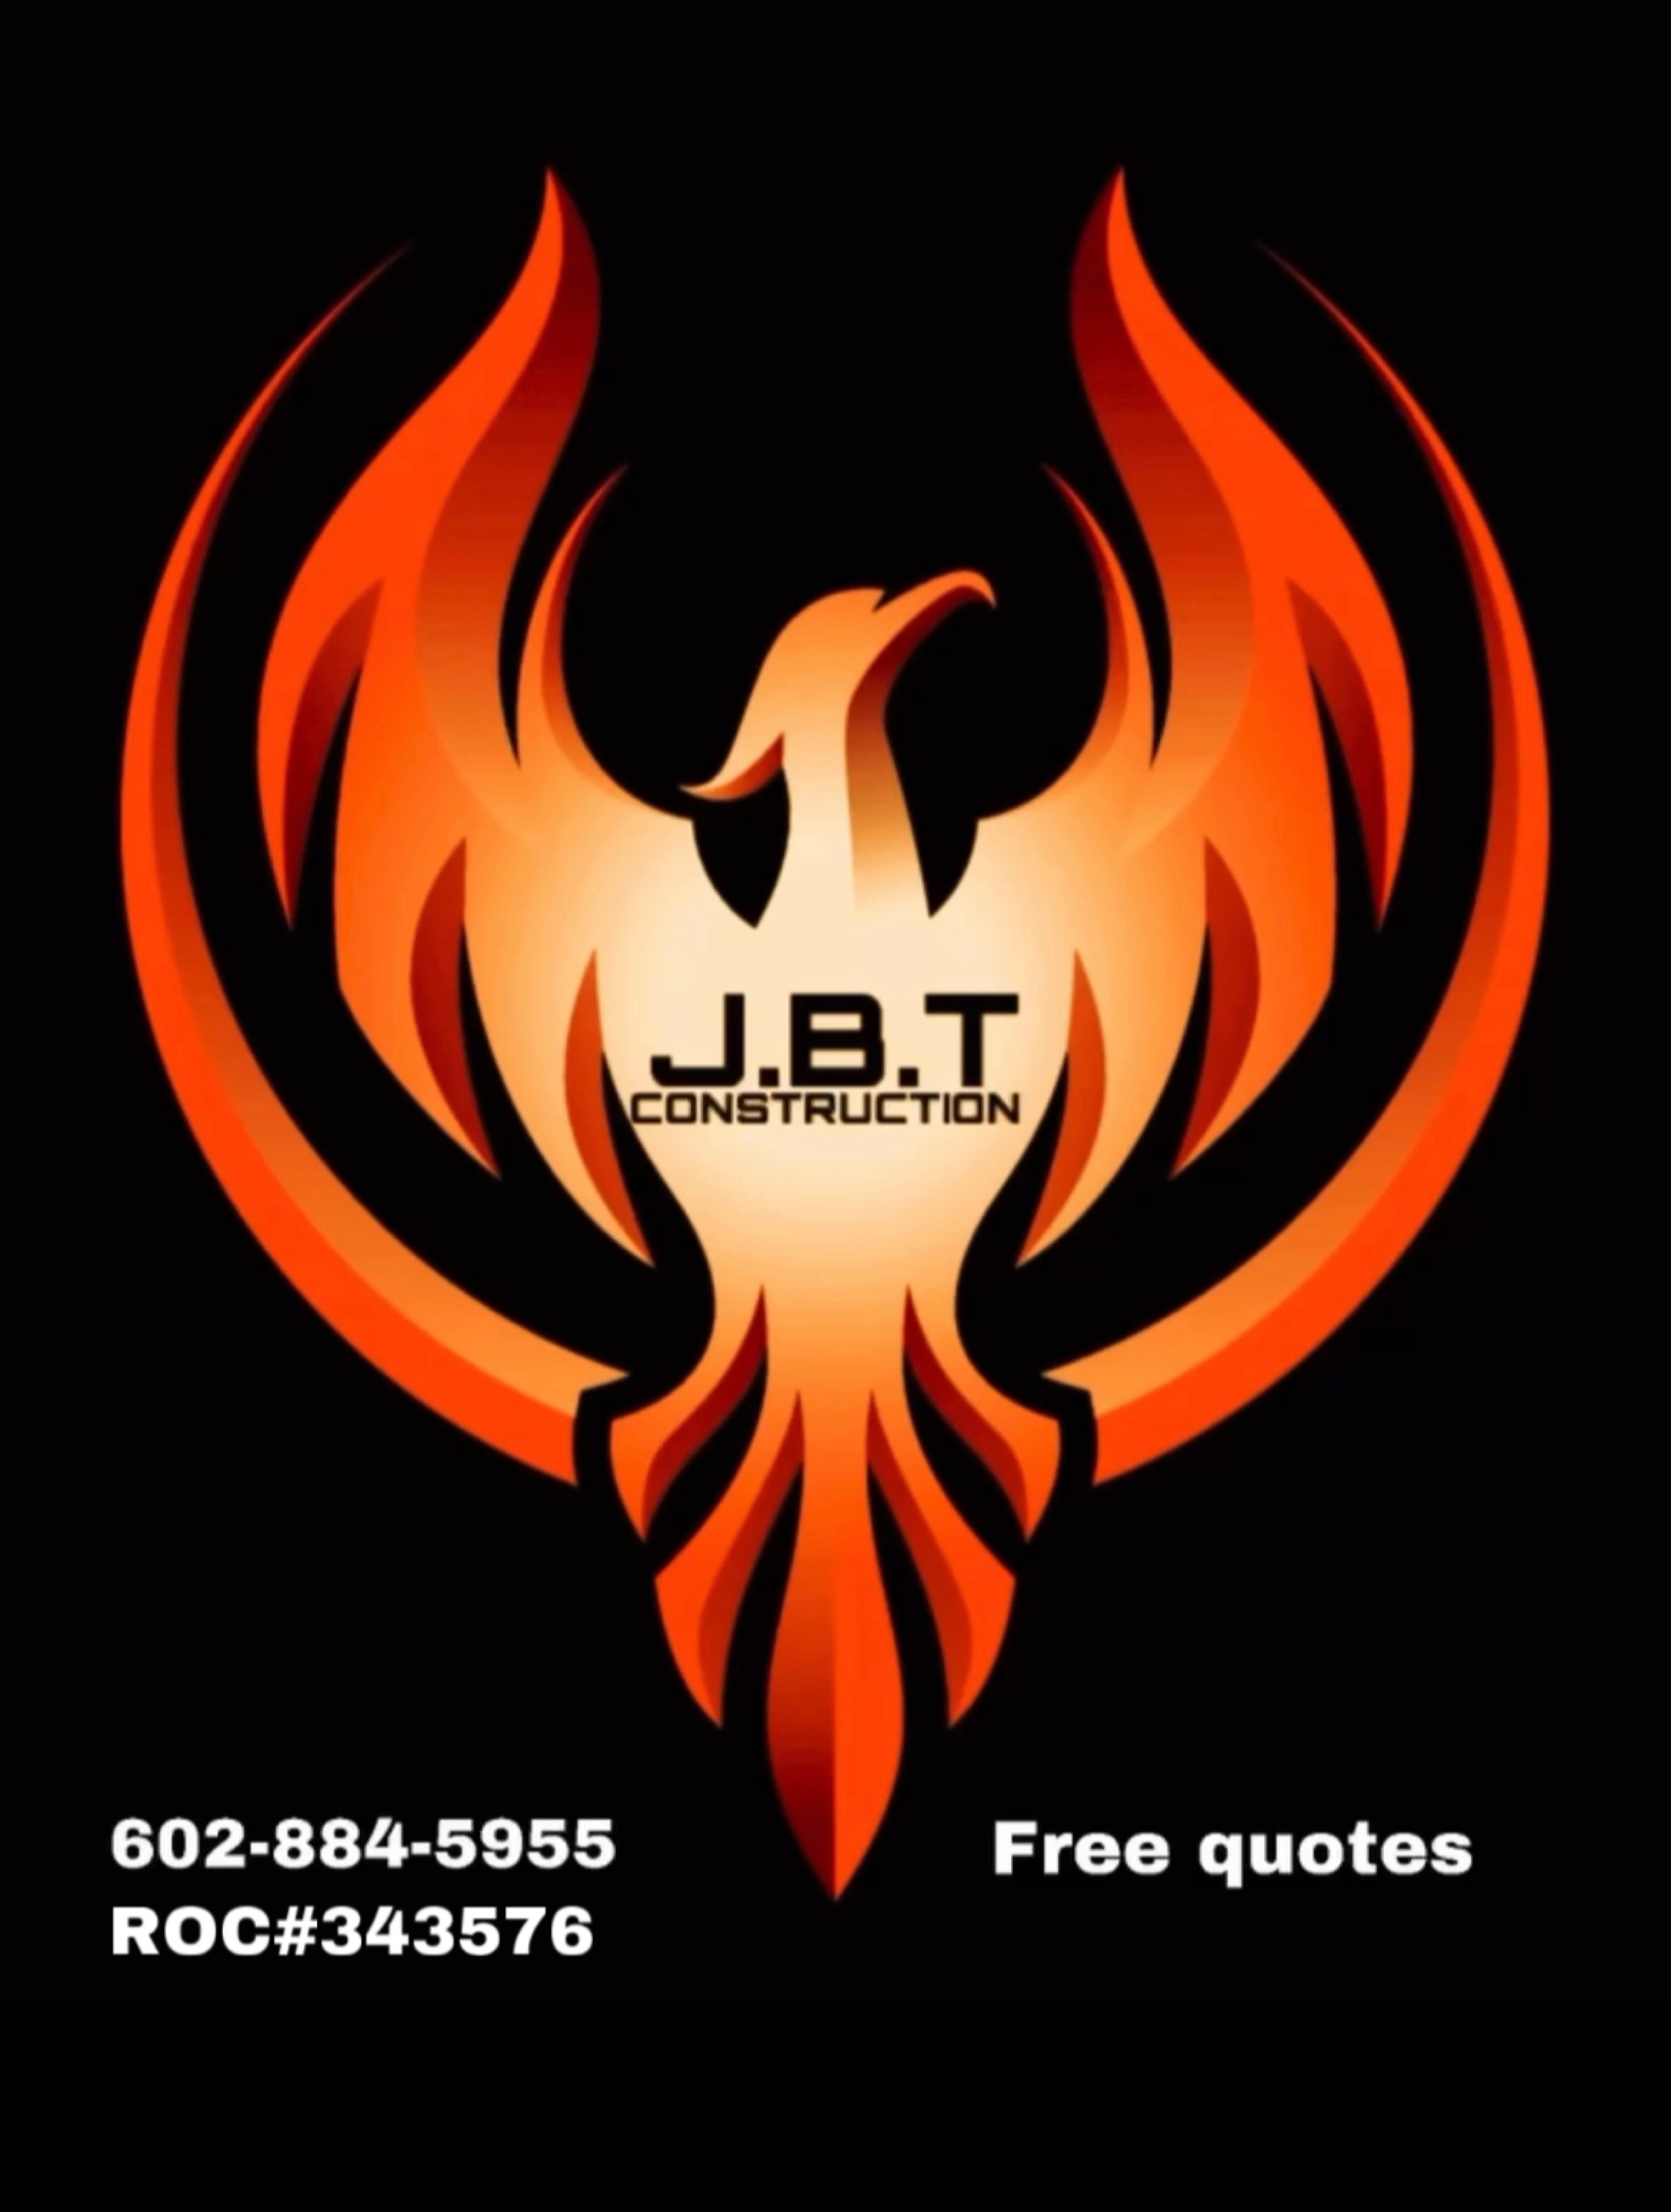 J.B.T Construction Logo